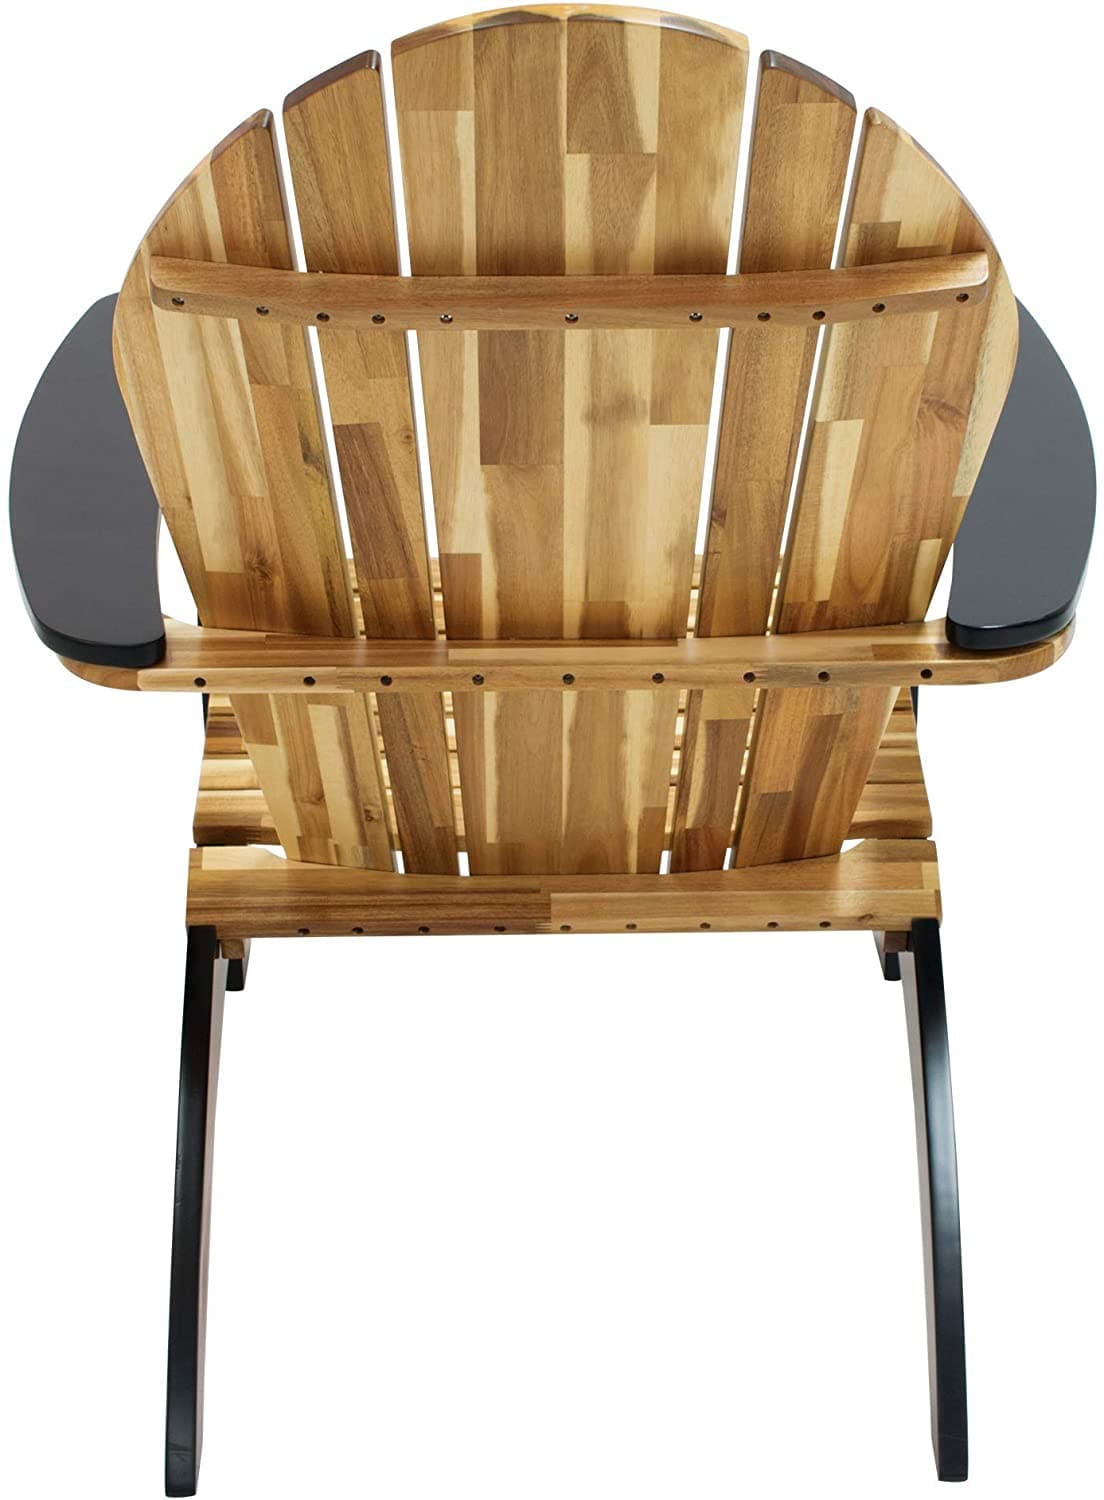 RIO Innovations Classic Woody Surf Adirondack Outdoor Wood Chair - Senior.com Adirondack Chairs